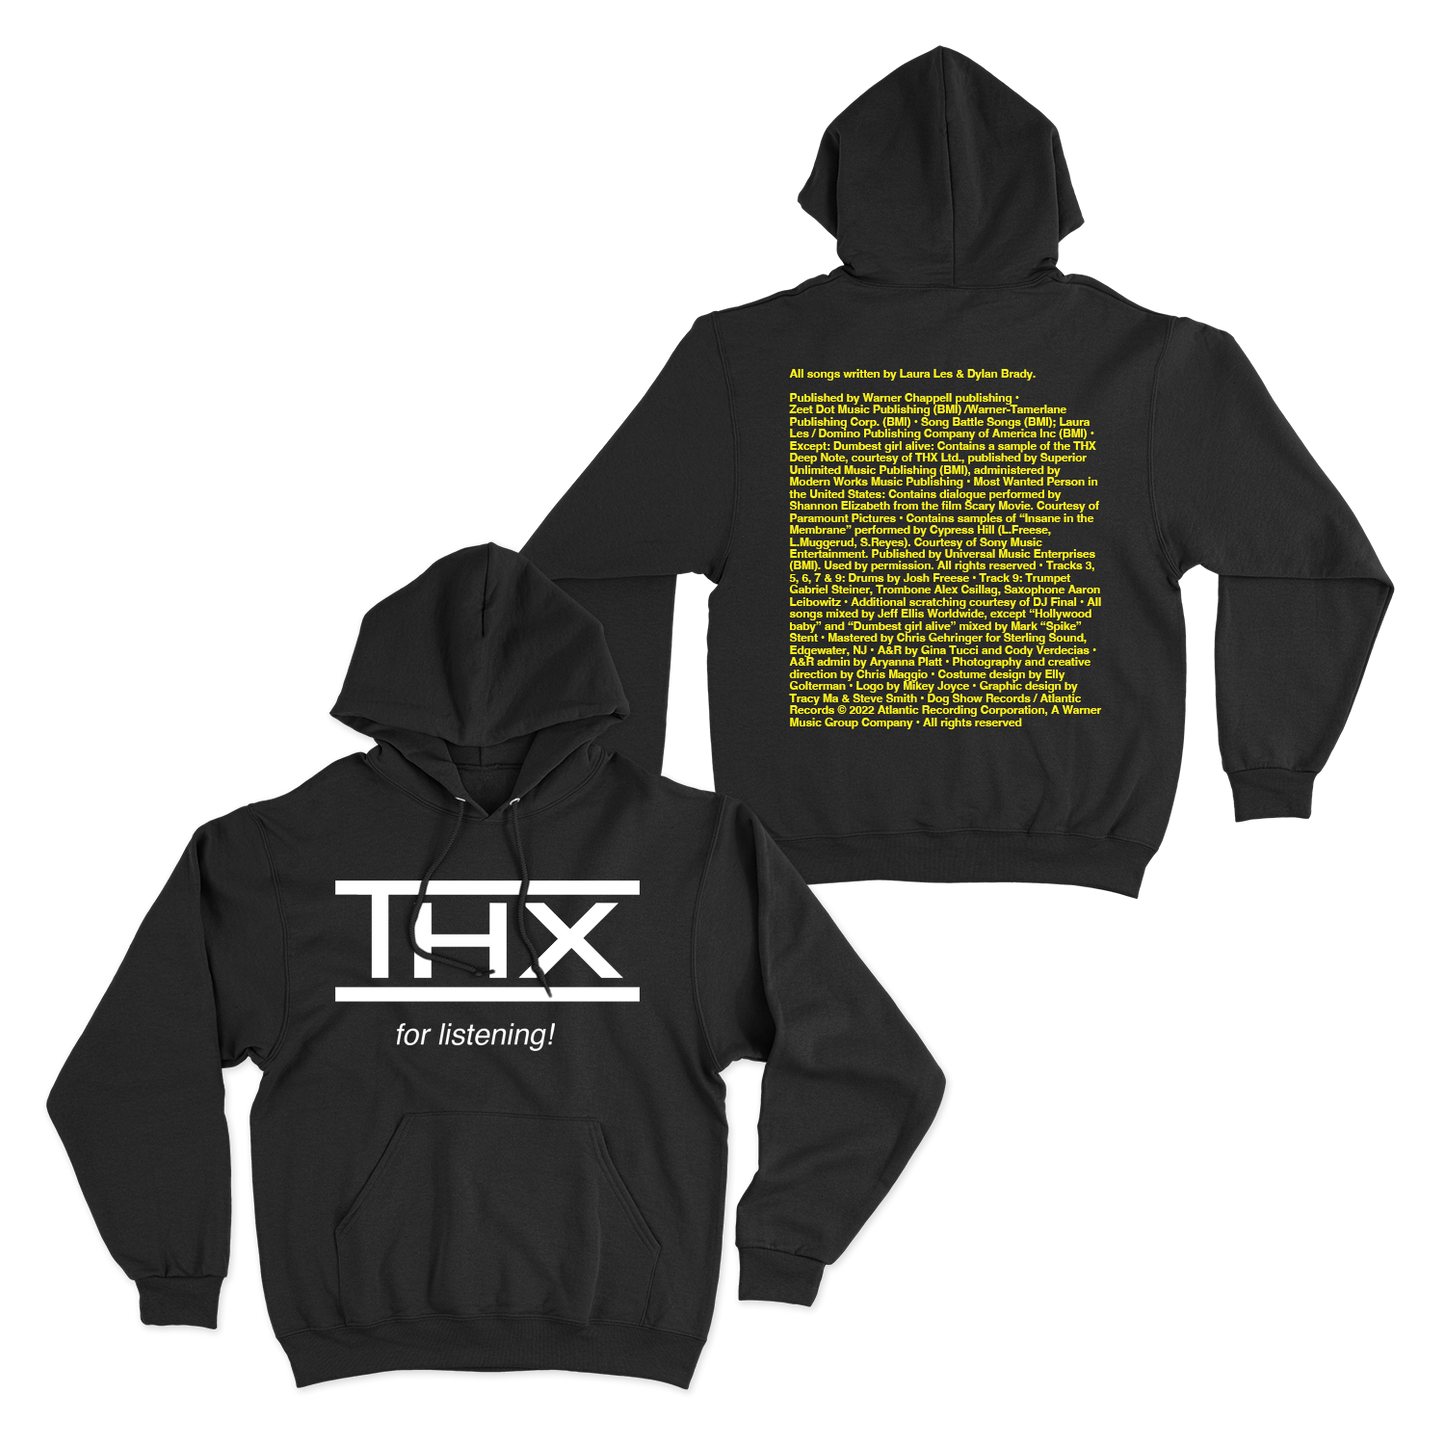 thx for listening hoodie